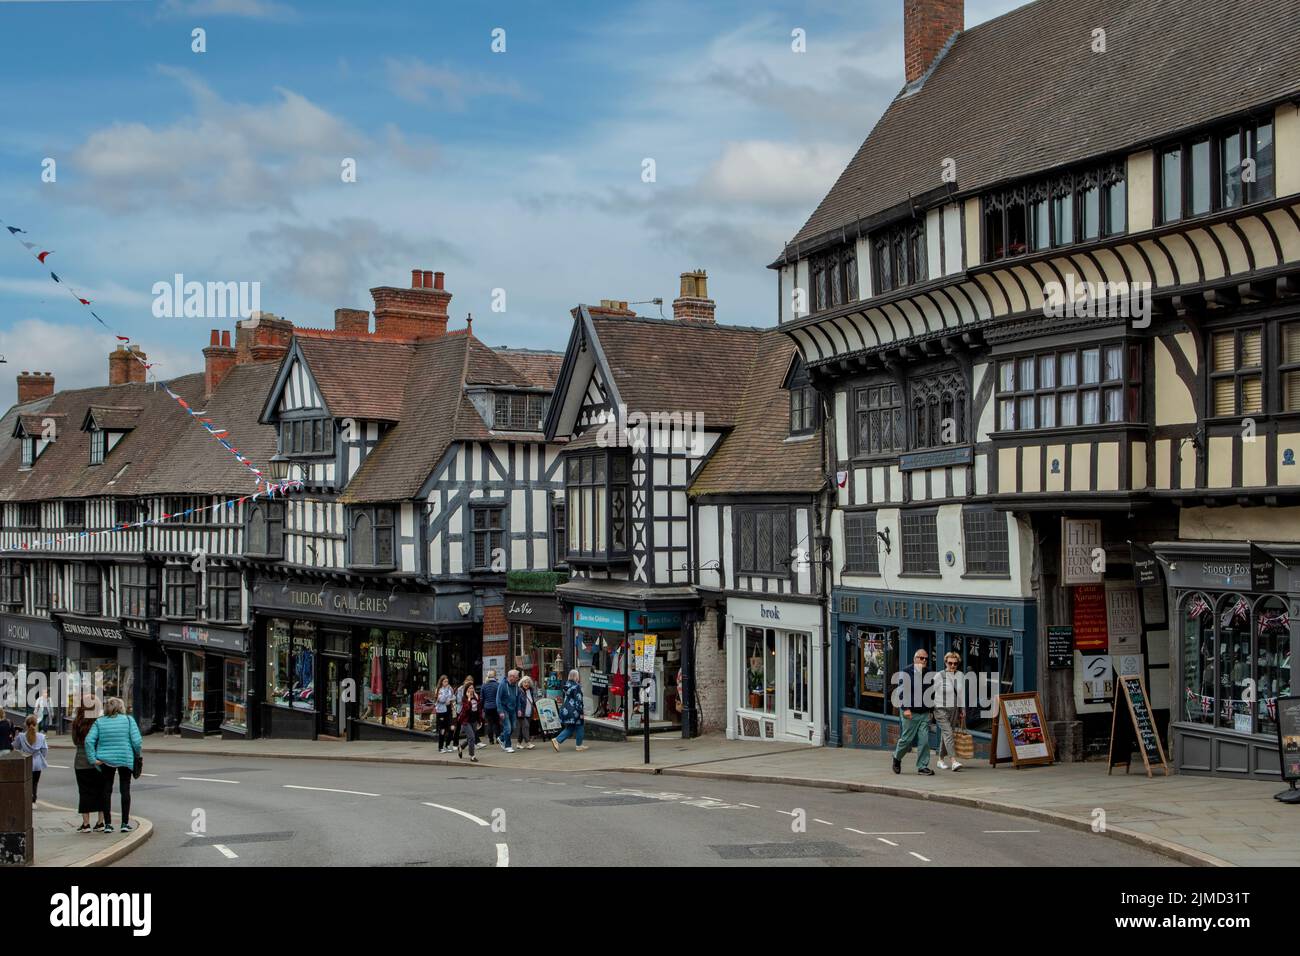 Bâtiments à colombages Tudor, Shrewsbury, Shropshire, Angleterre Banque D'Images